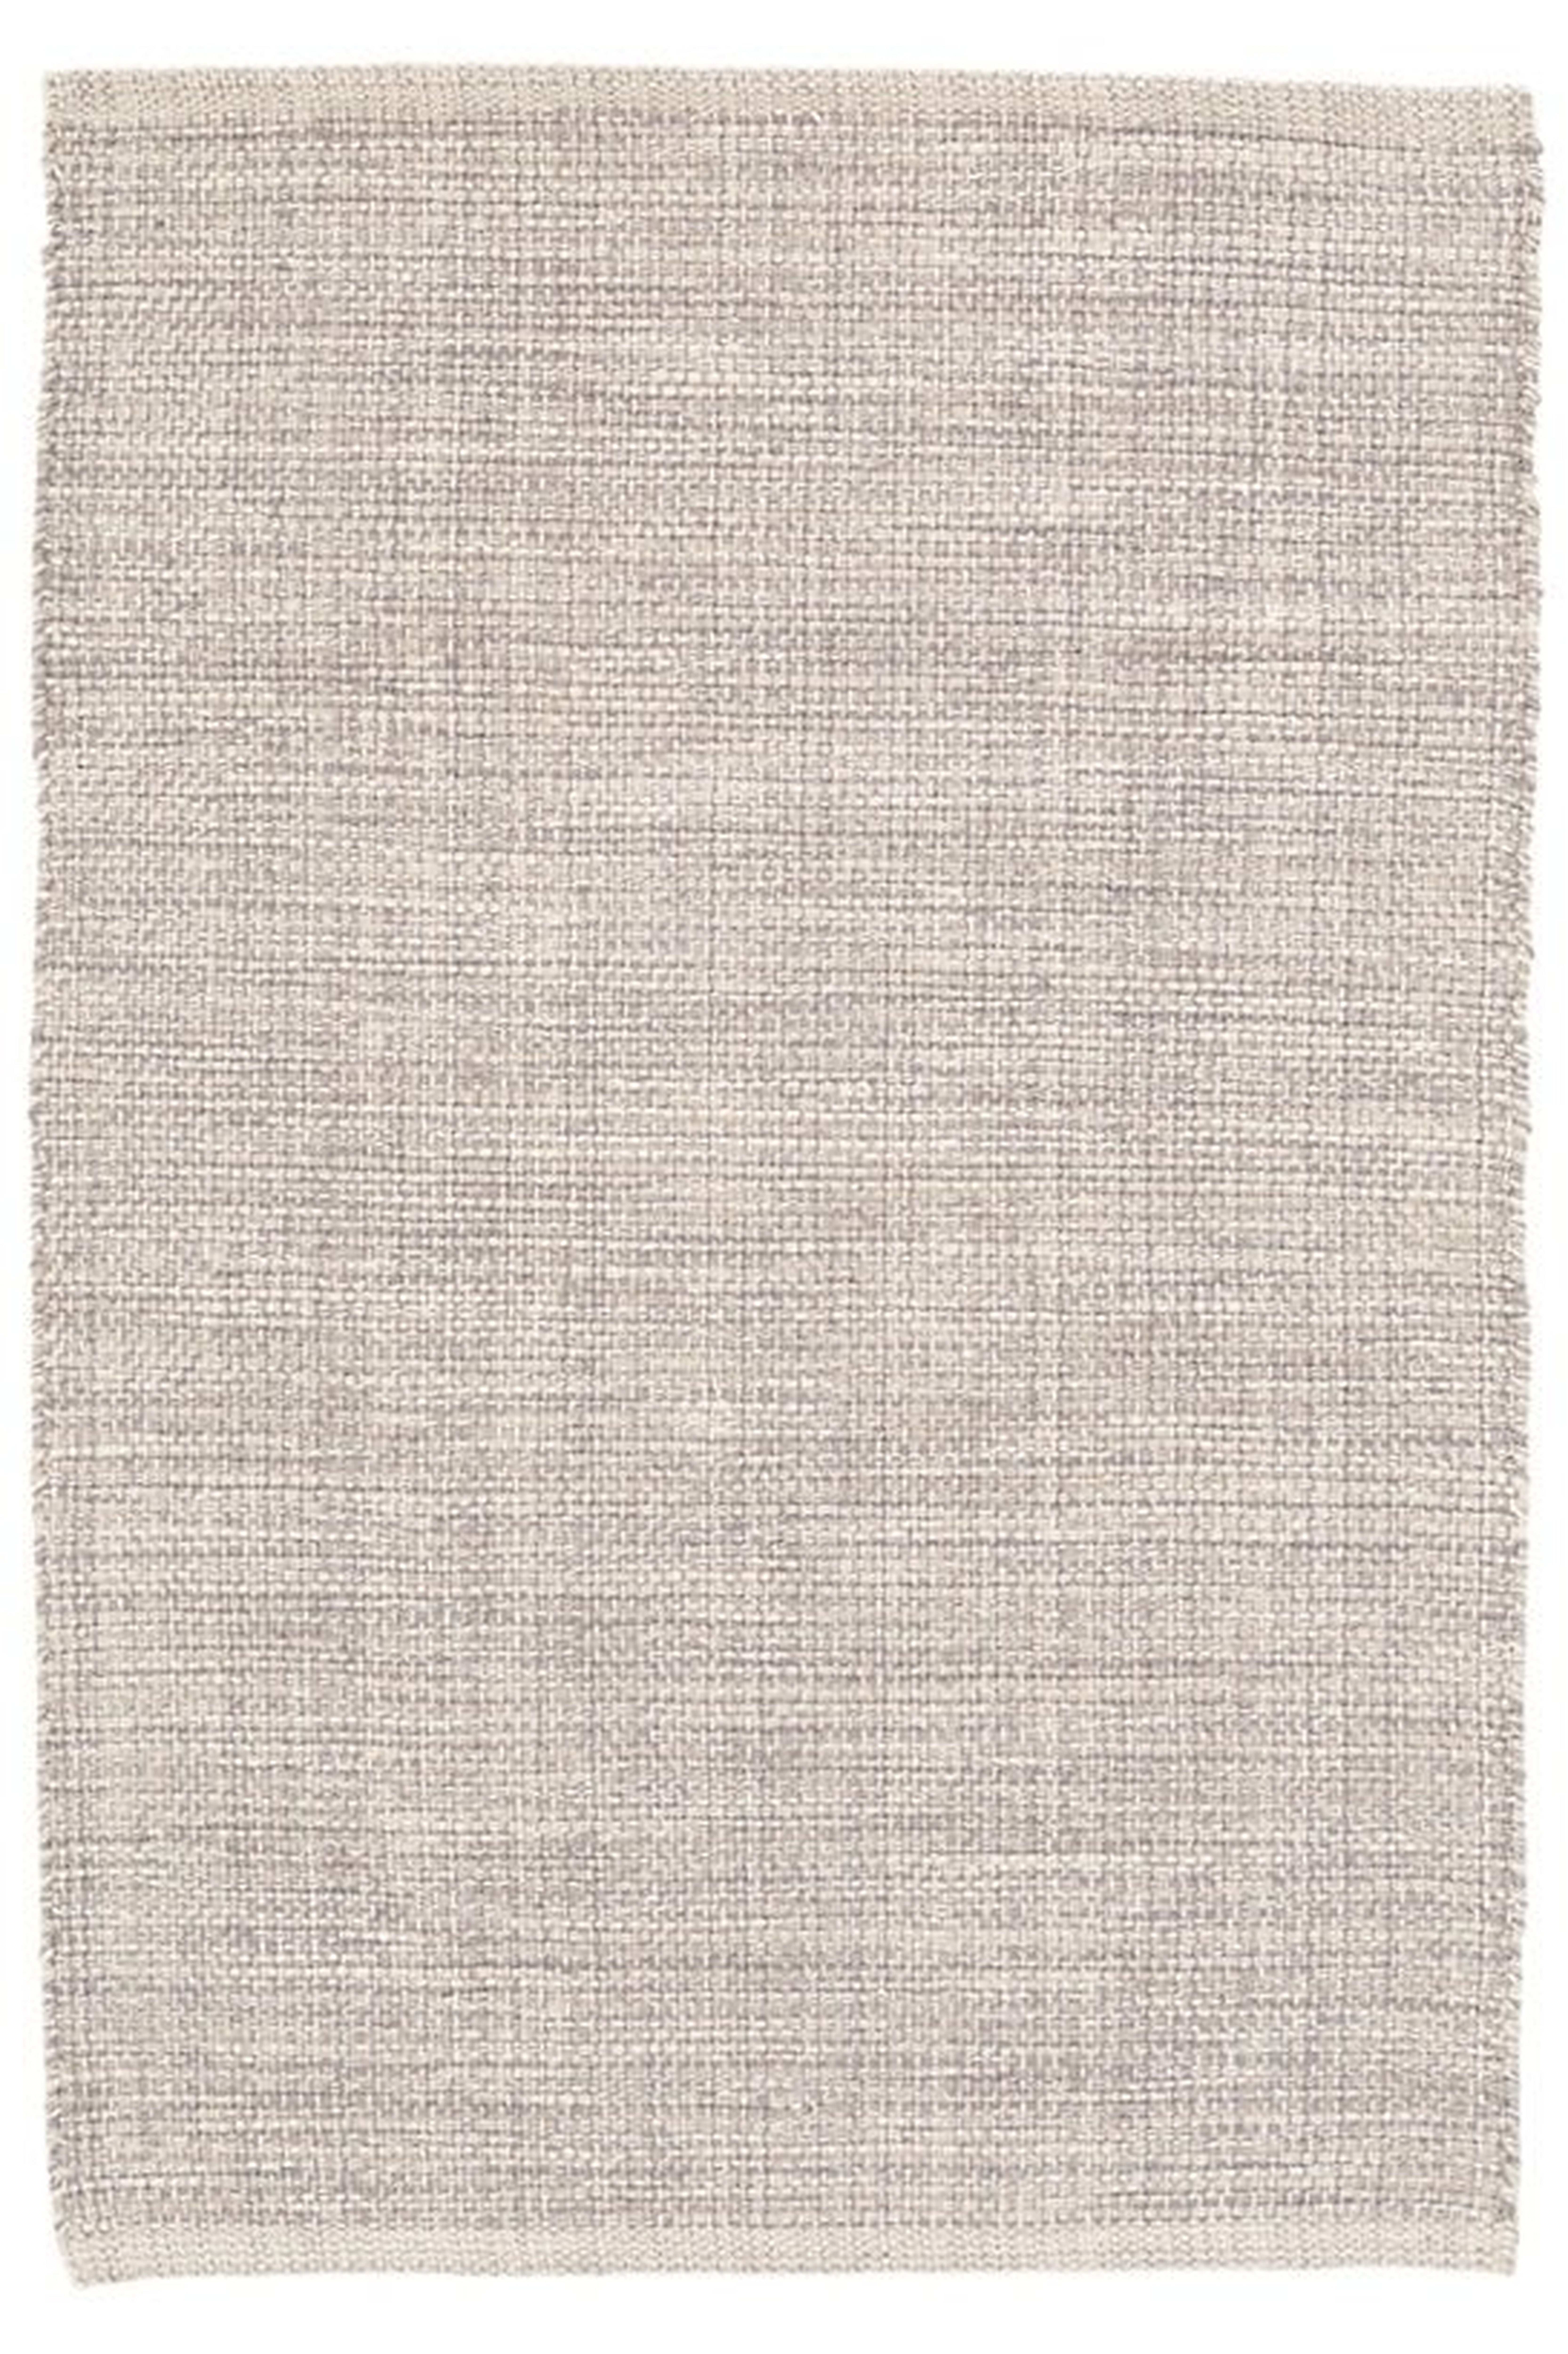 Marled Woven Cotton Rug, Gray, 8' x 10' - Dash and Albert